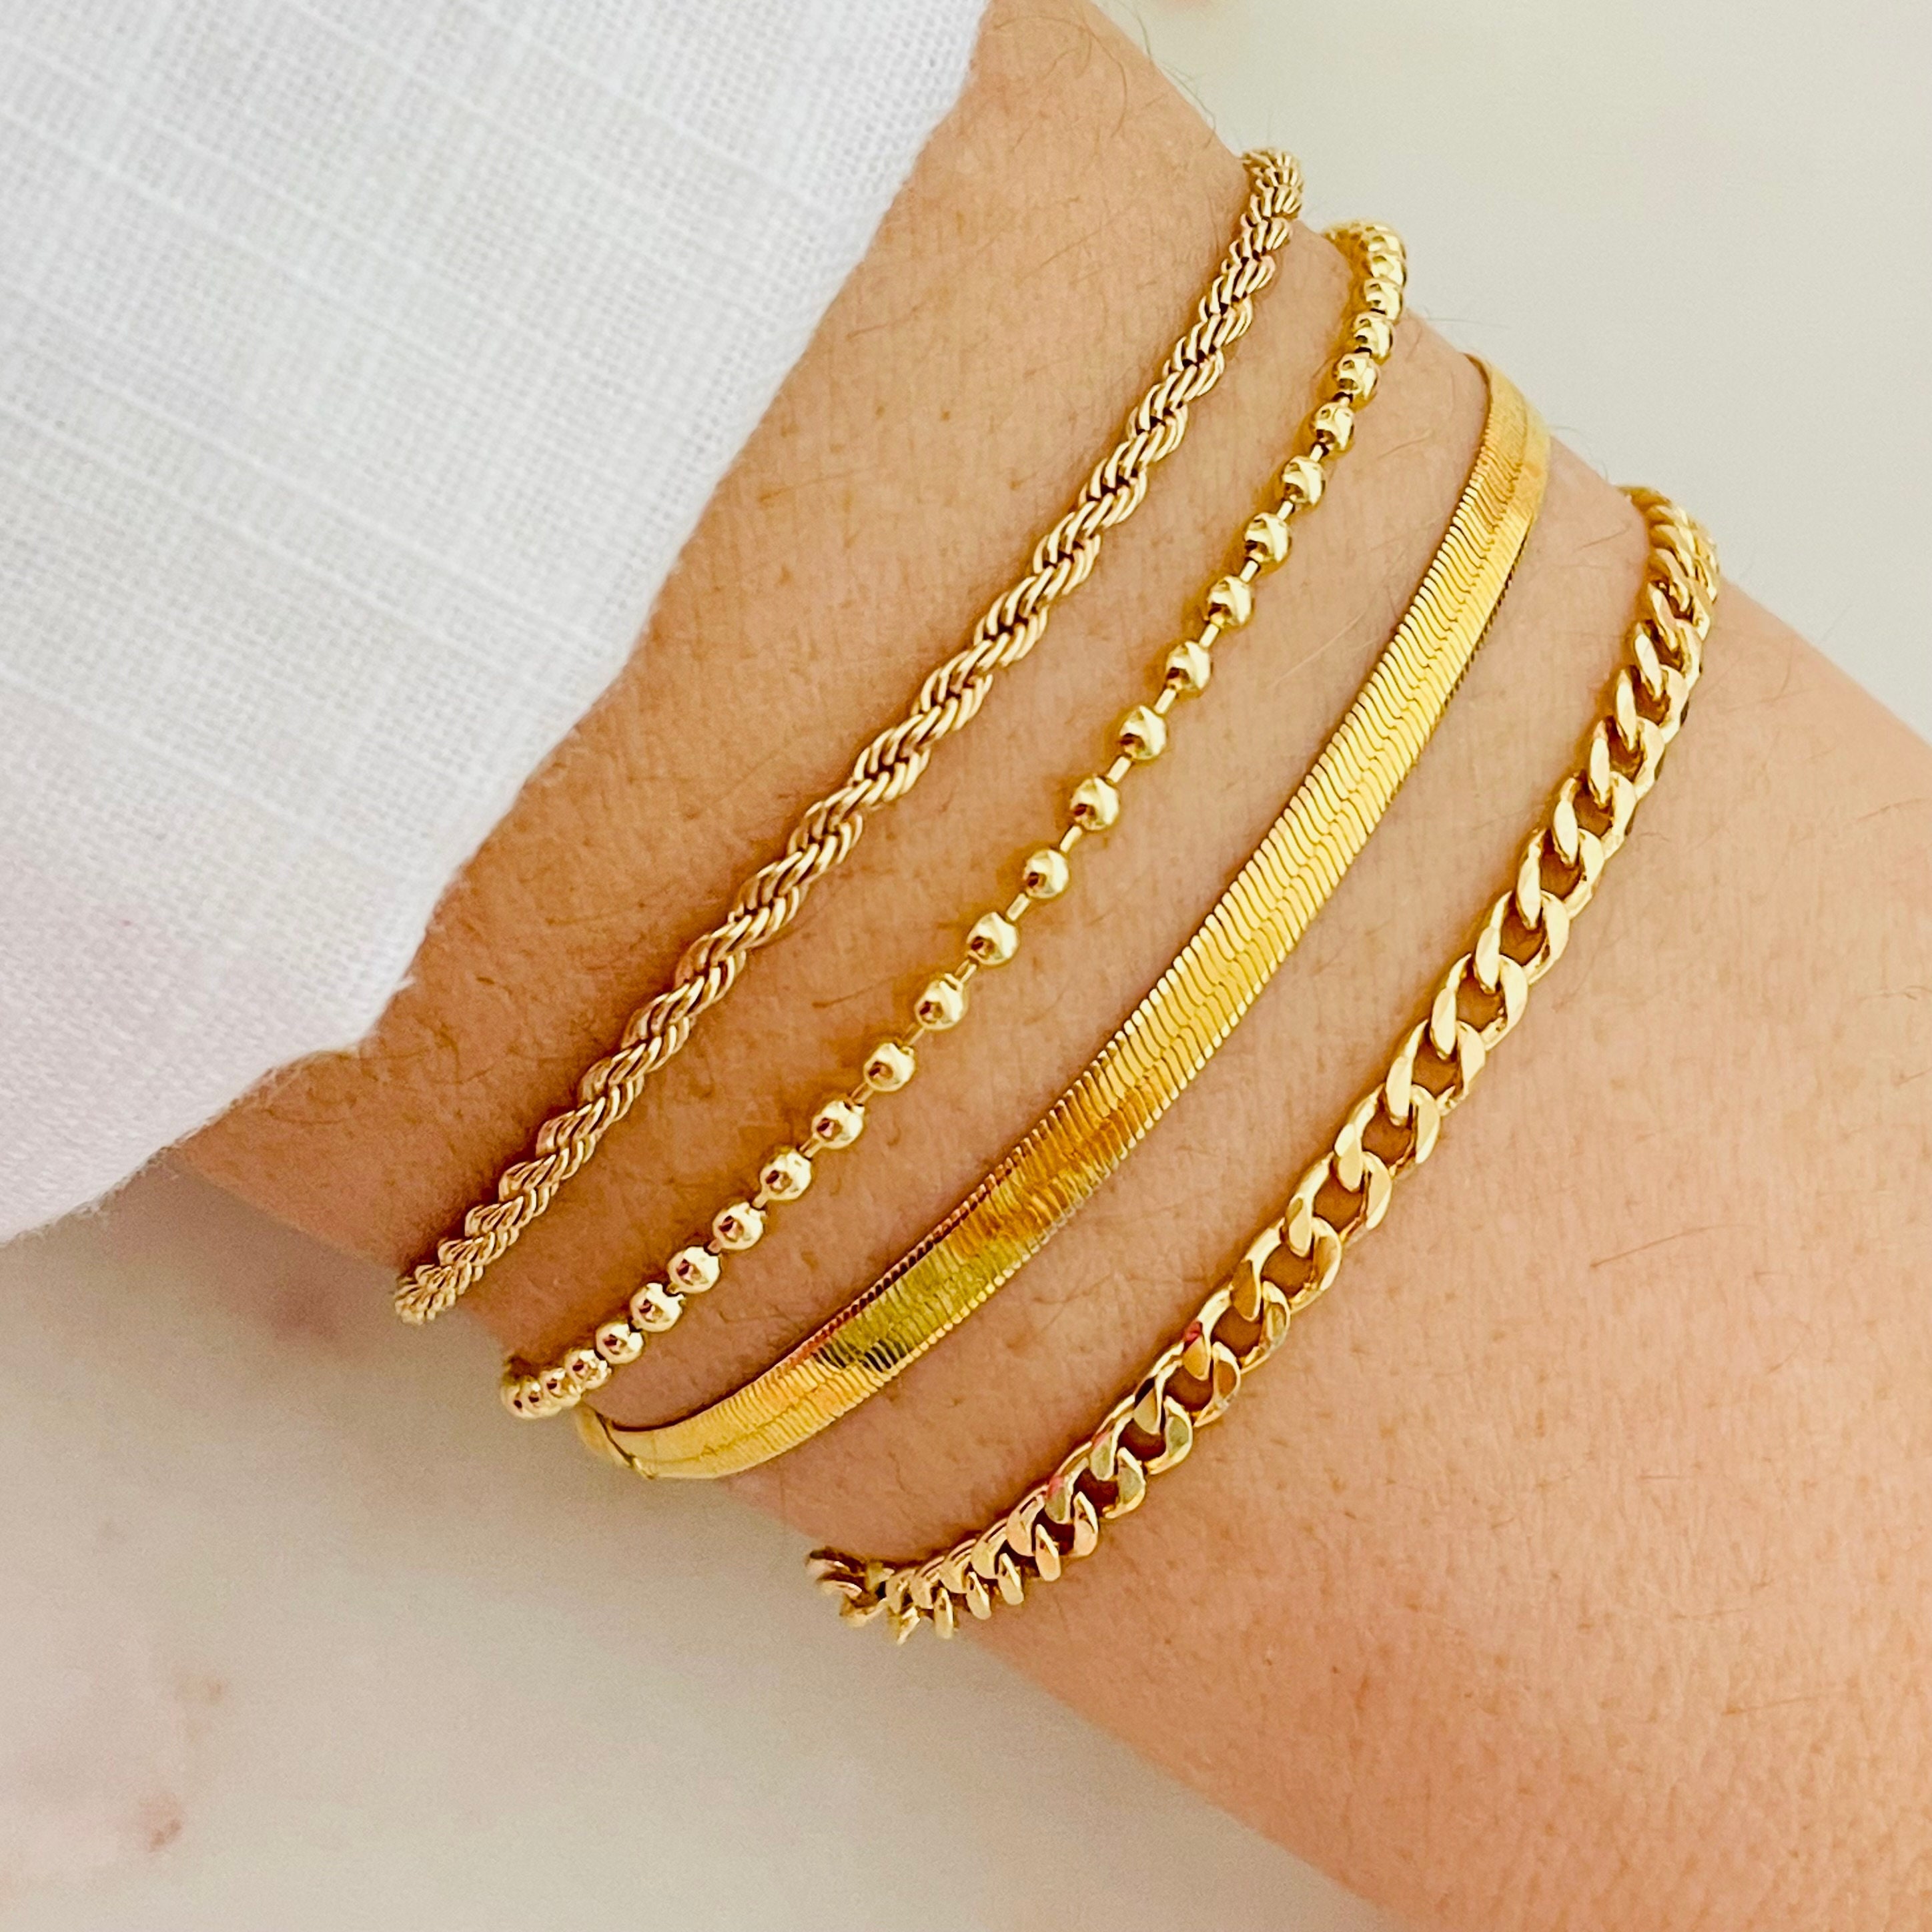 I love this bracelet stack🥰 #braceletstack #braceletideas #jewelleryt